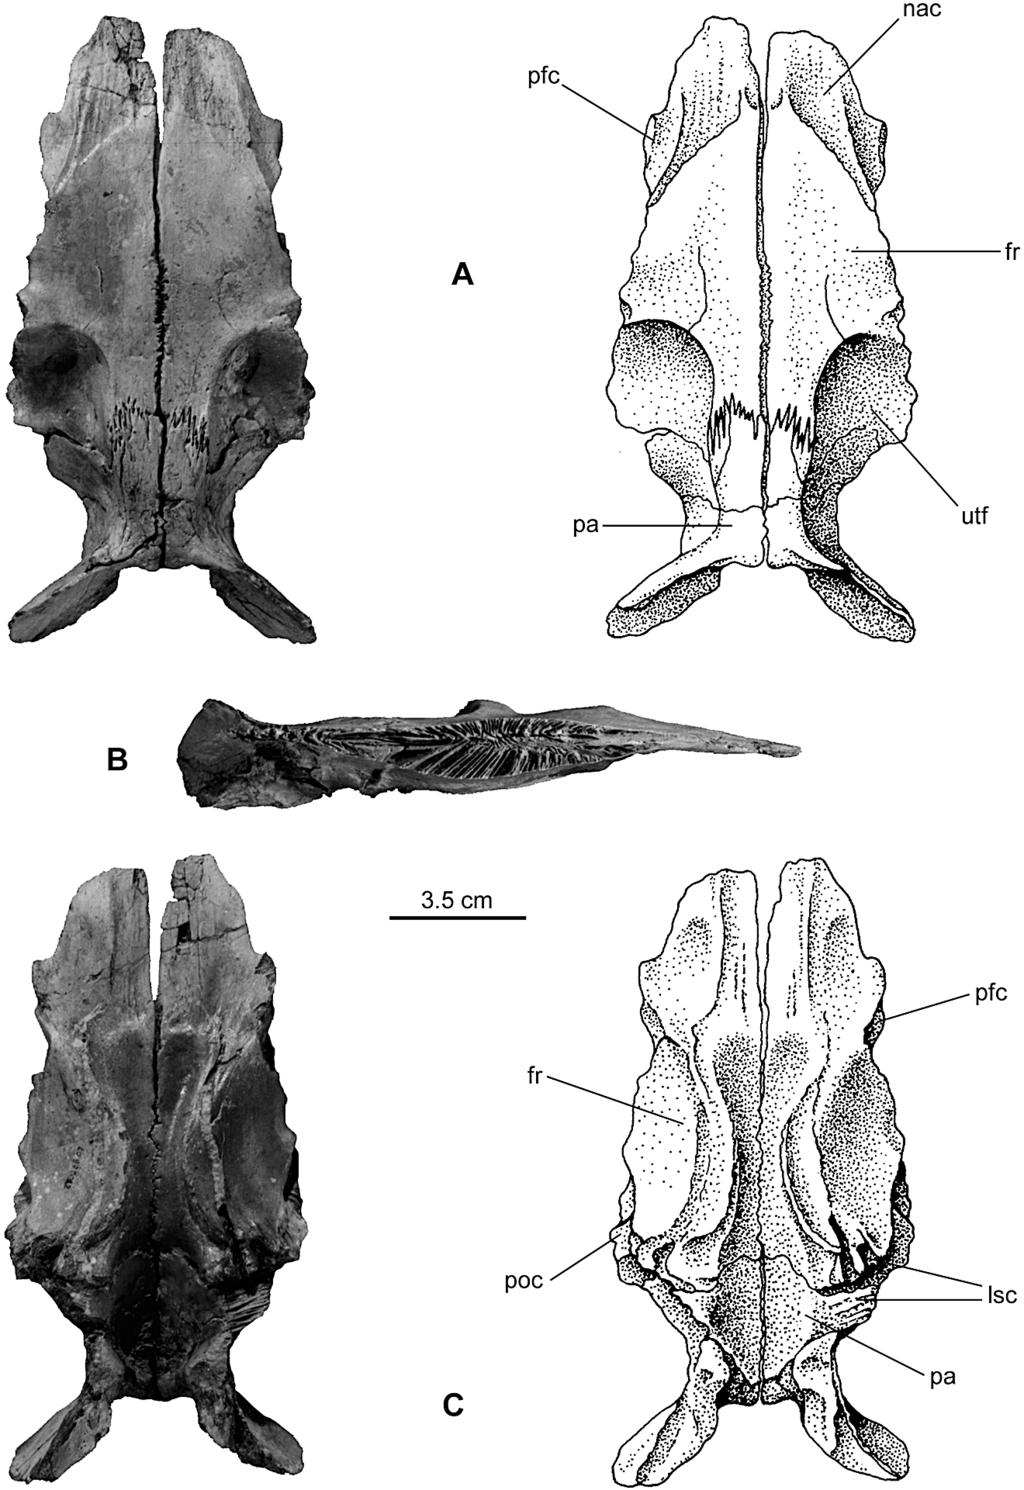 552 JOURNAL OF VERTEBRATE PALEONTOLOGY, VOL. 22, NO. 3, 2002 FIGURE 5. Frontoparietals of Poekilopleuron? valesdunensis, new species (MNHN 1998-13).